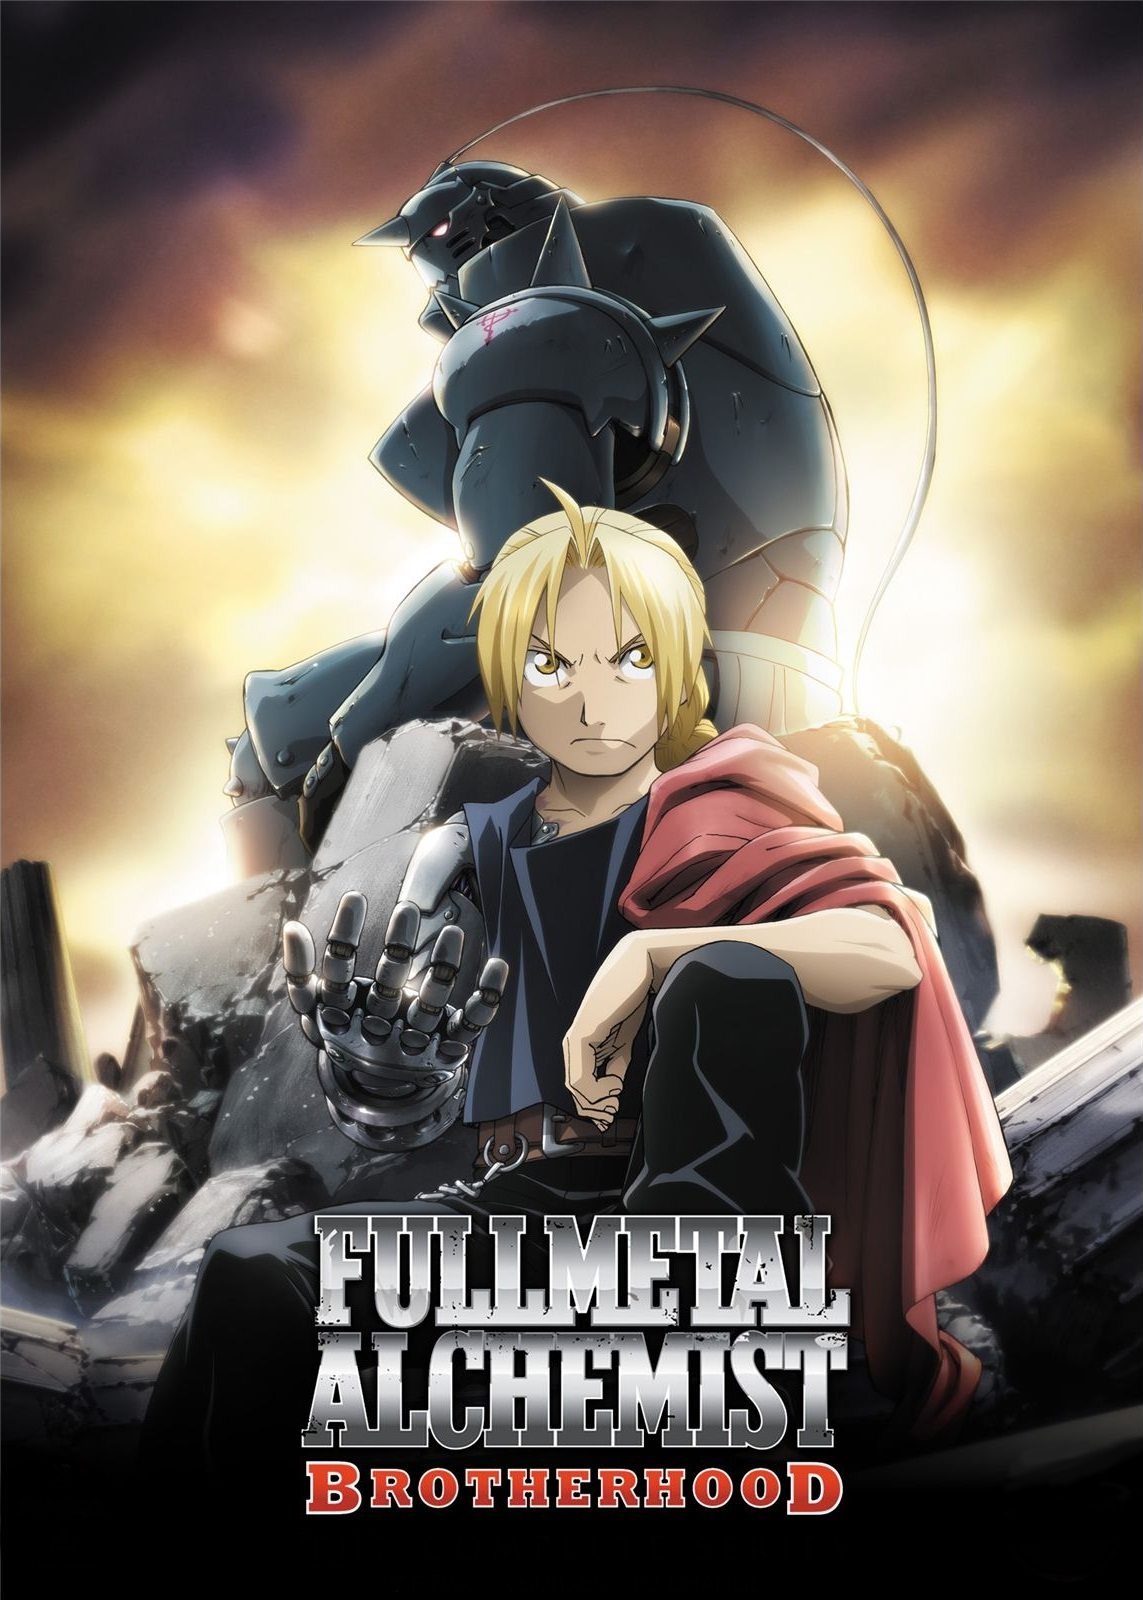 Fullmetal Alchemist: Brotherhood — Creative, Fun, and Insanely